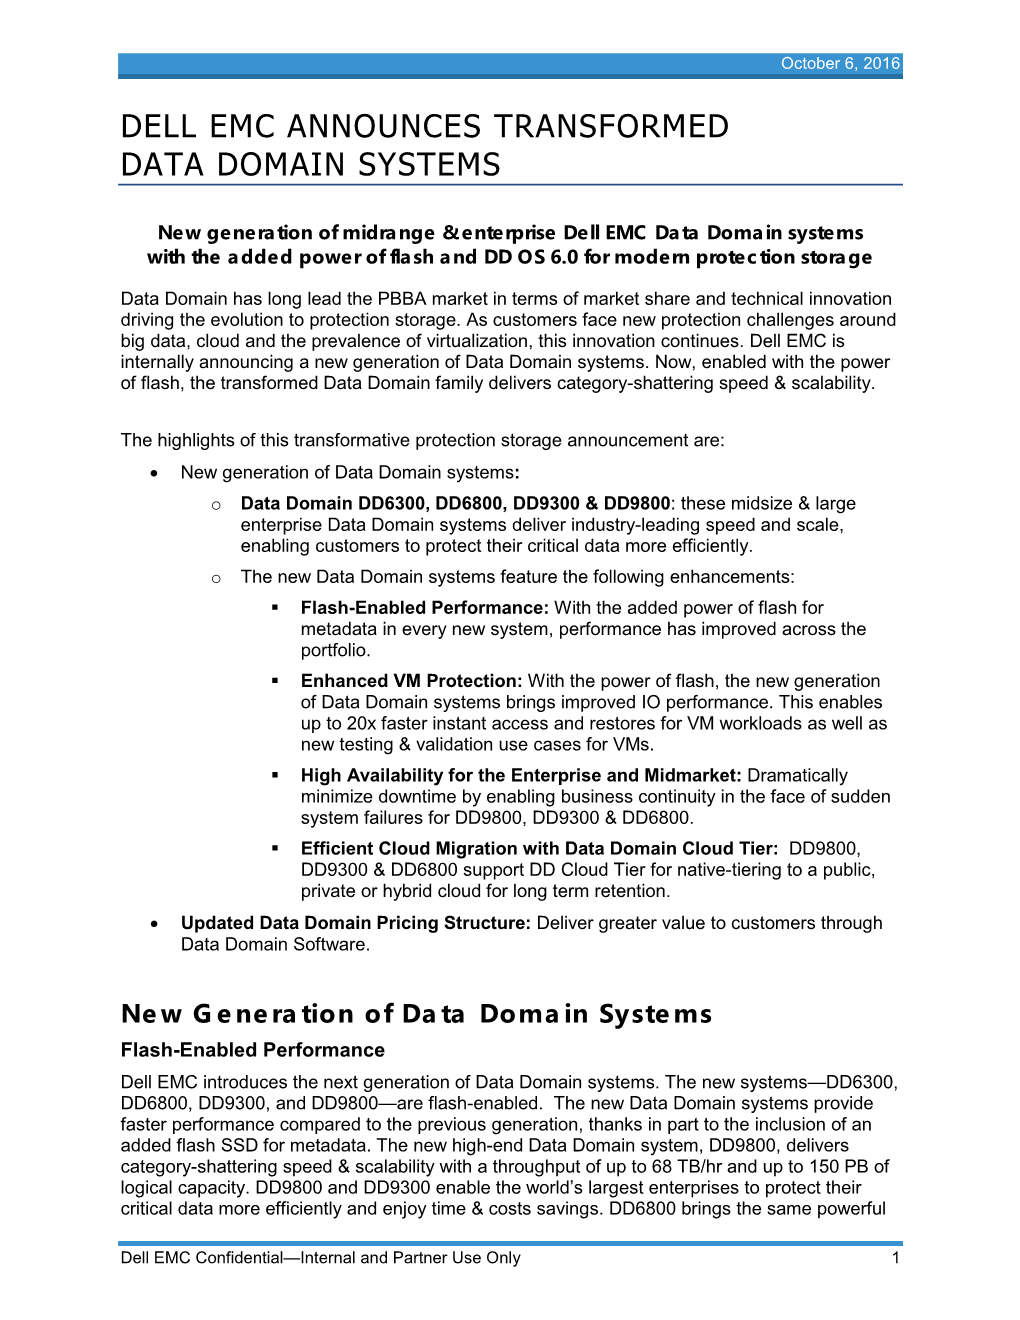 Dell Emc Announces Transformed Data Domain Systems